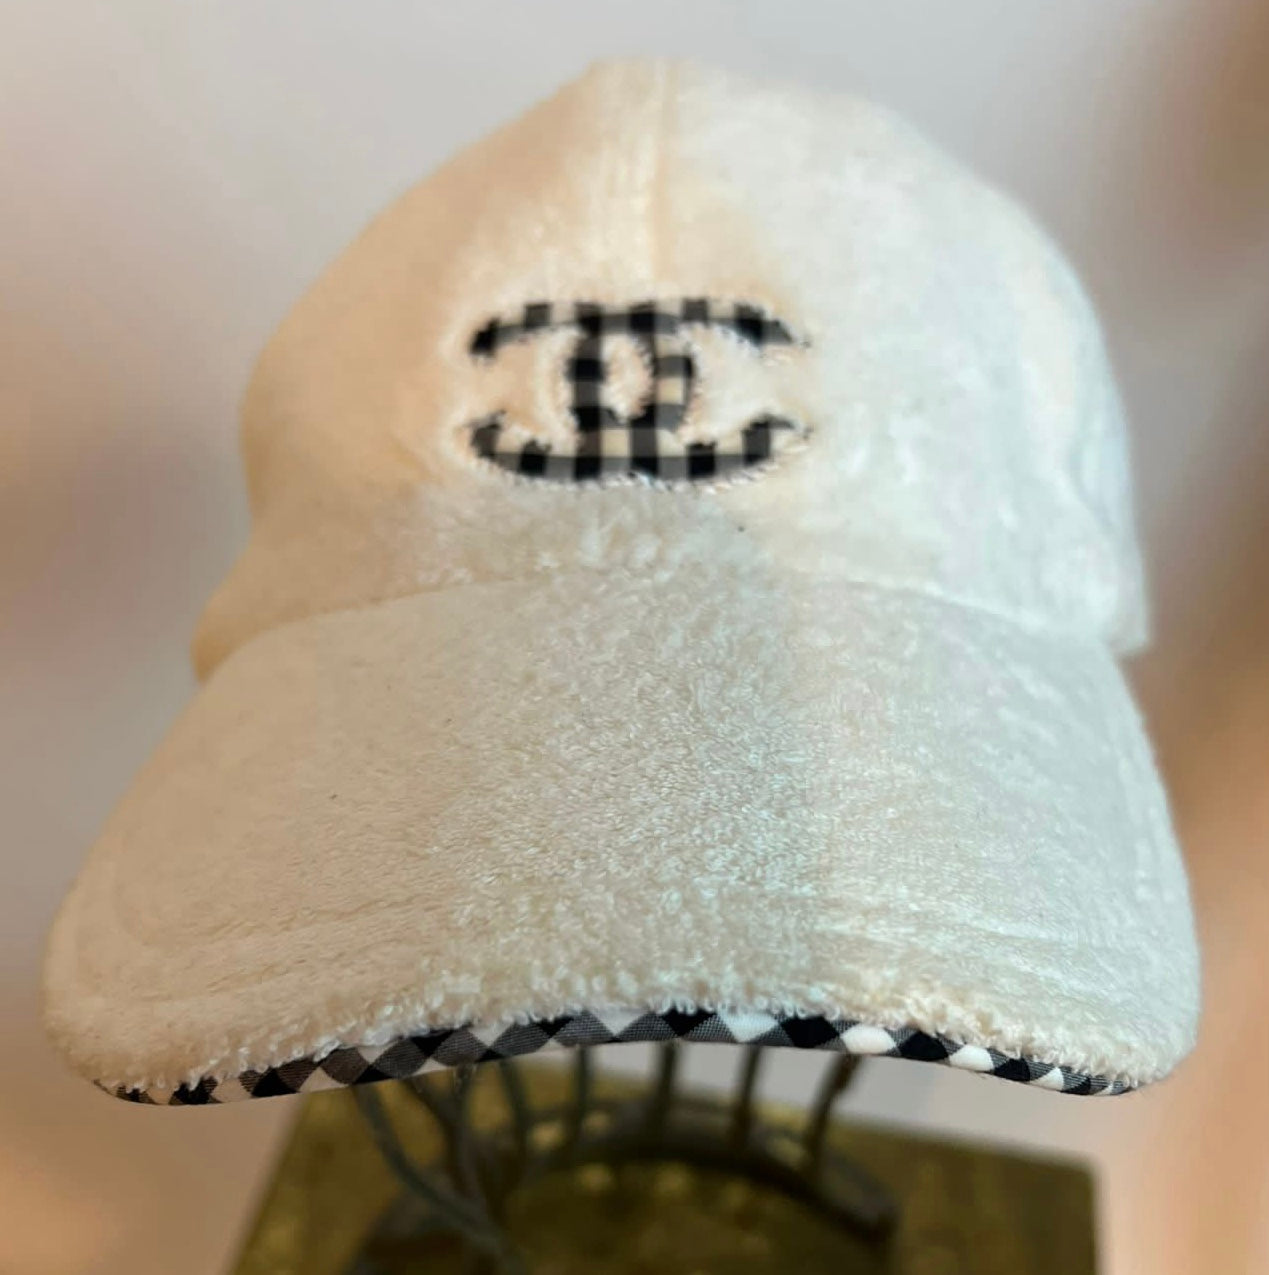 Chanel White CC Terry Cloth Cotton Baseball Cap Hat Size Medium